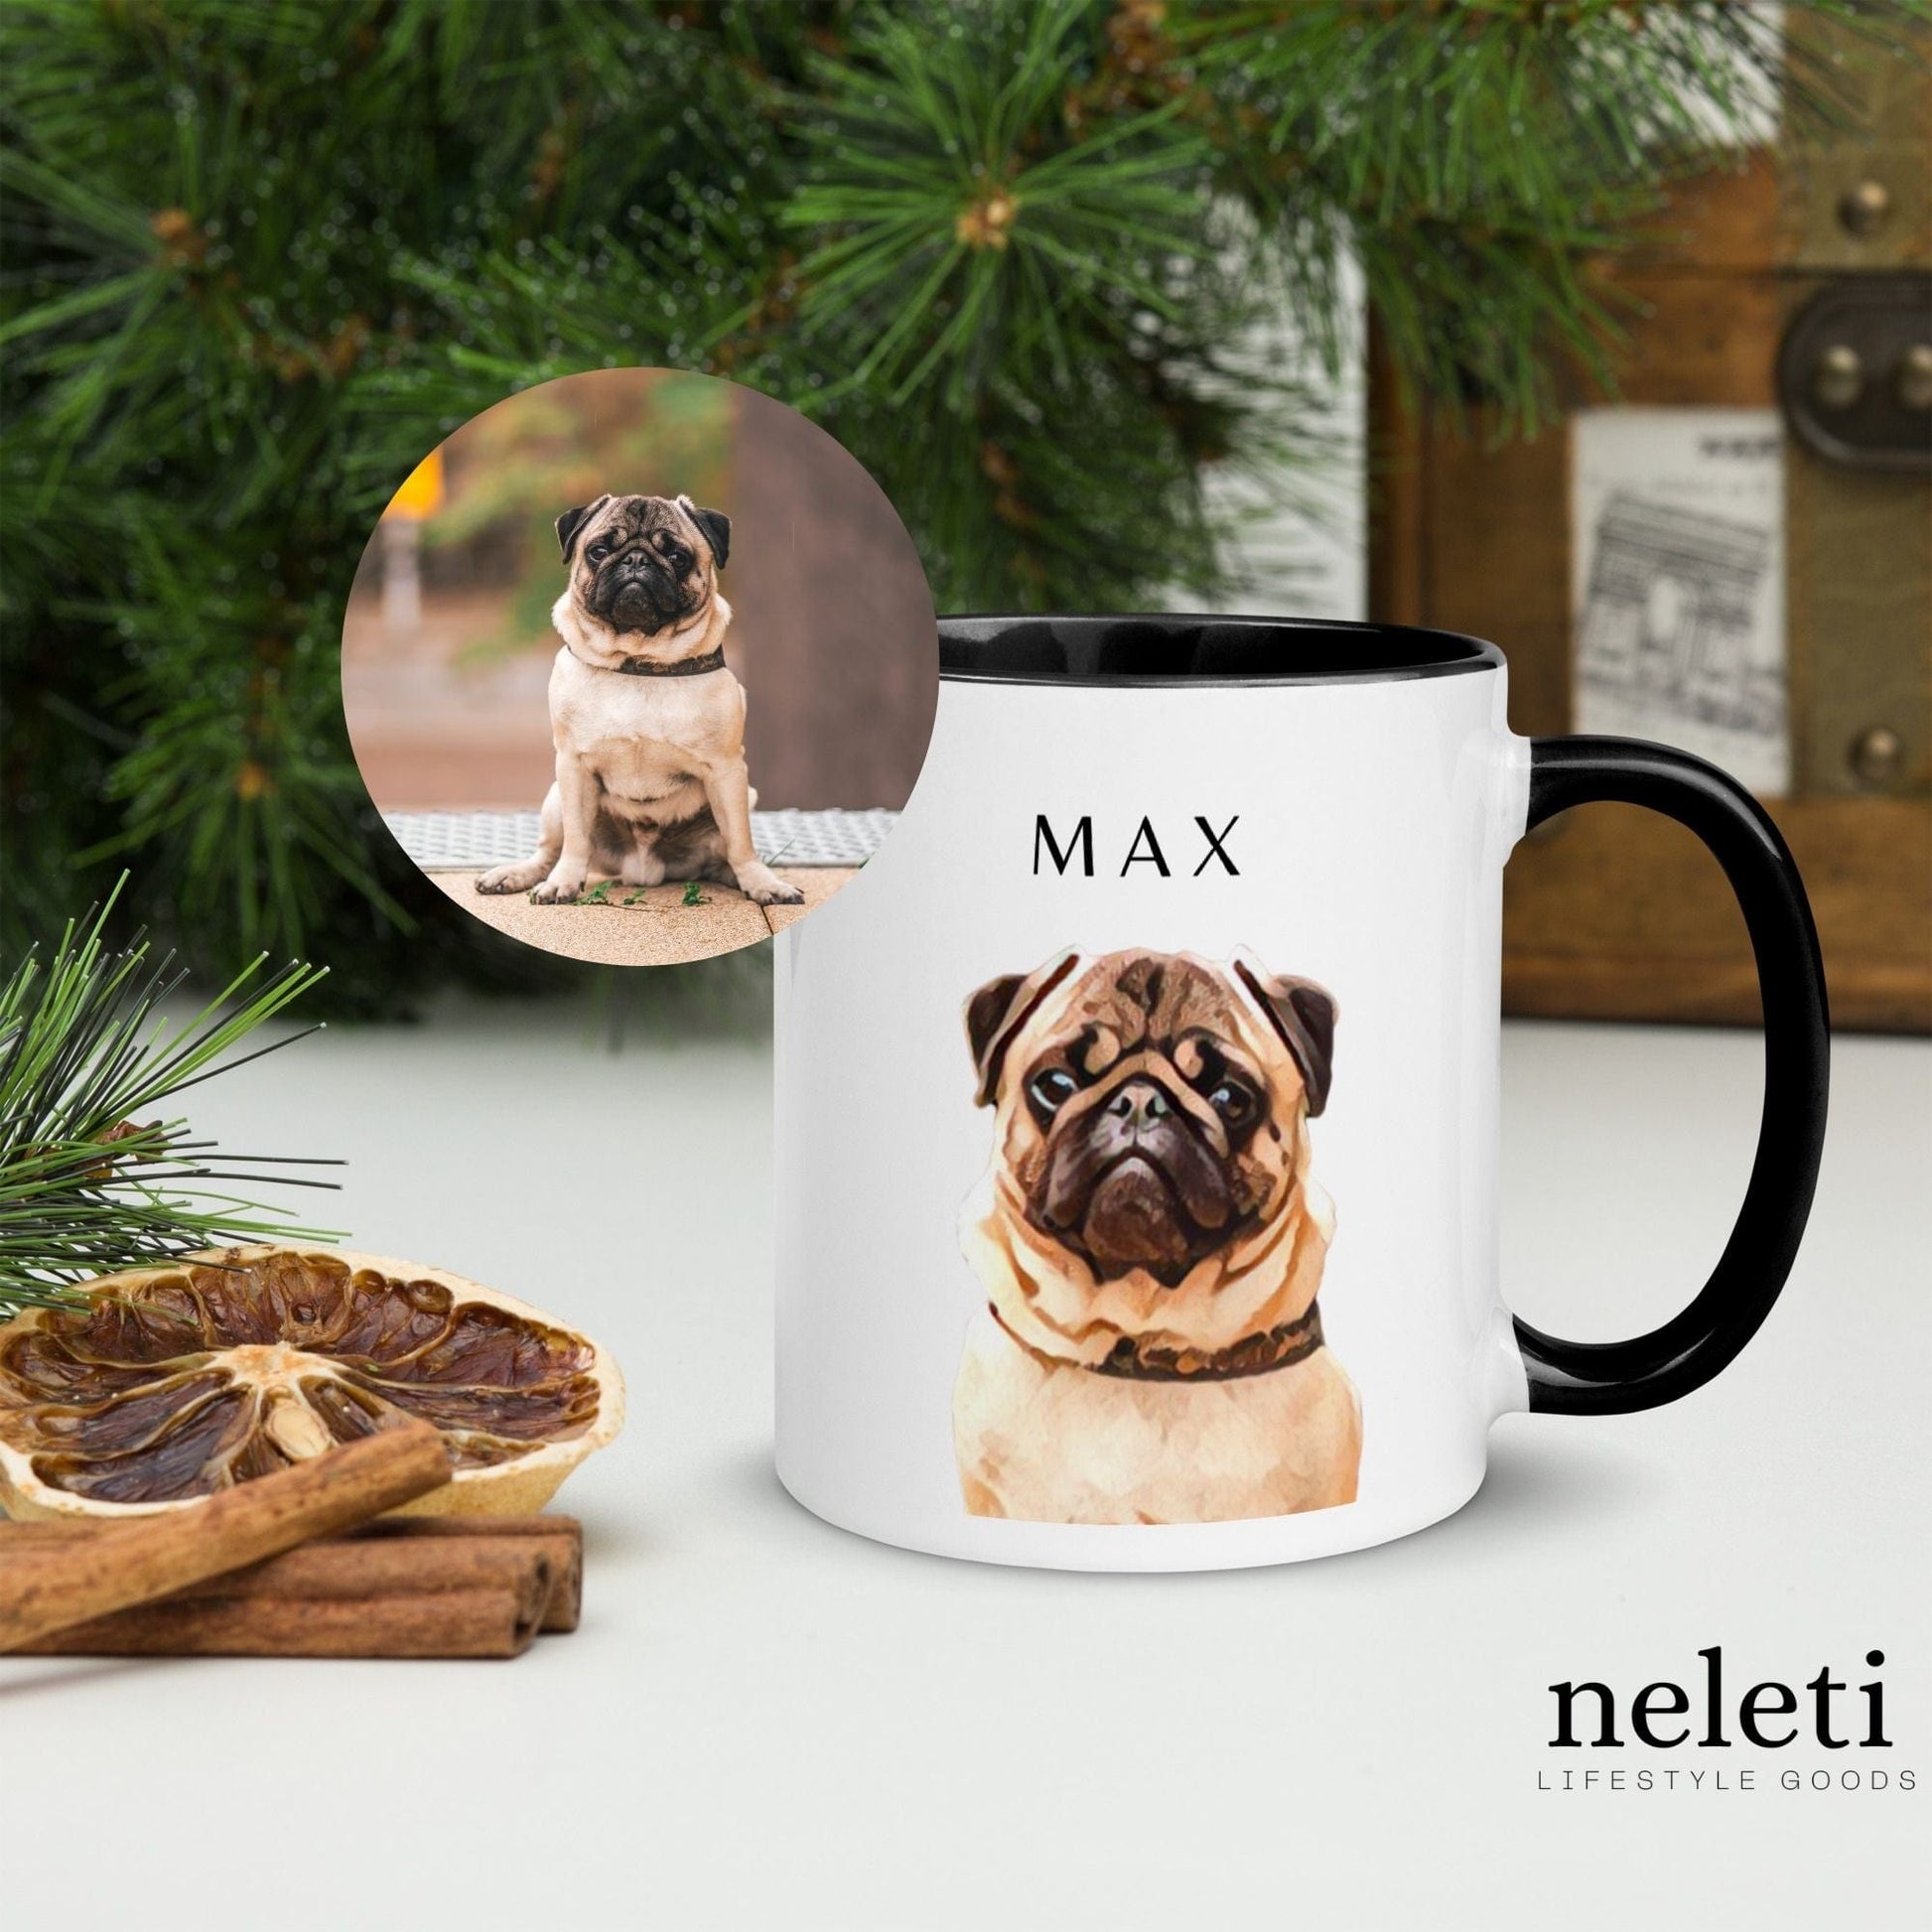 neleti.com-white-black-custom-mug-with-dog-print